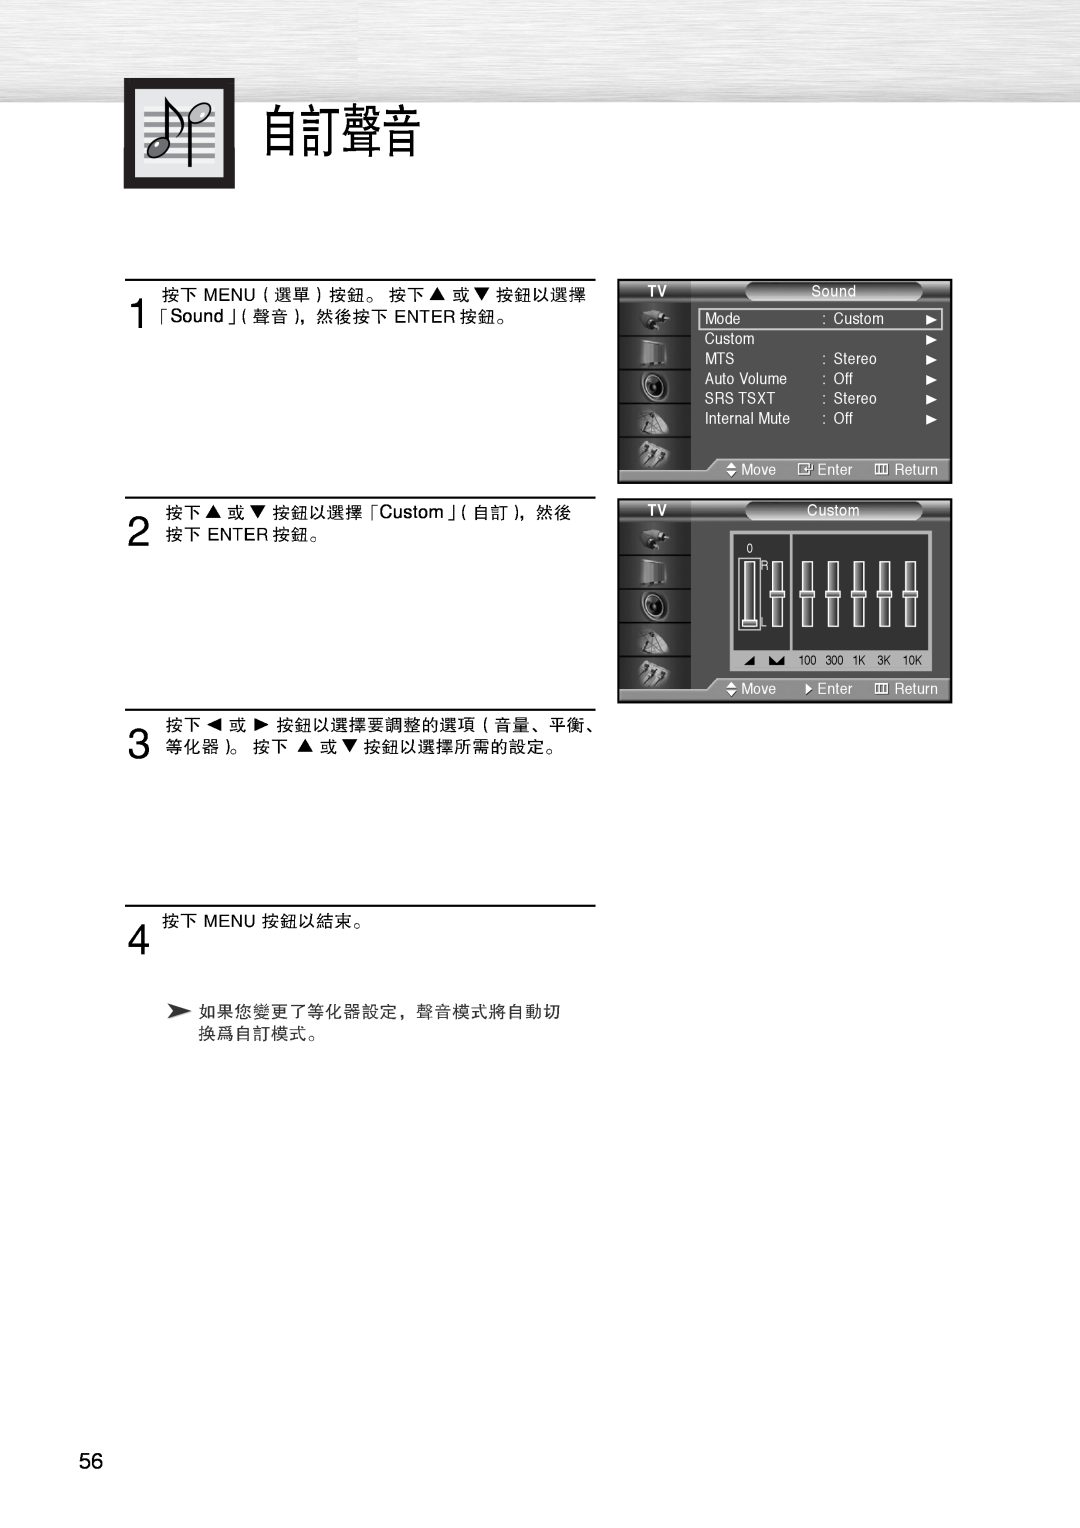 Samsung PL-42D4S manual Sound, Custom 